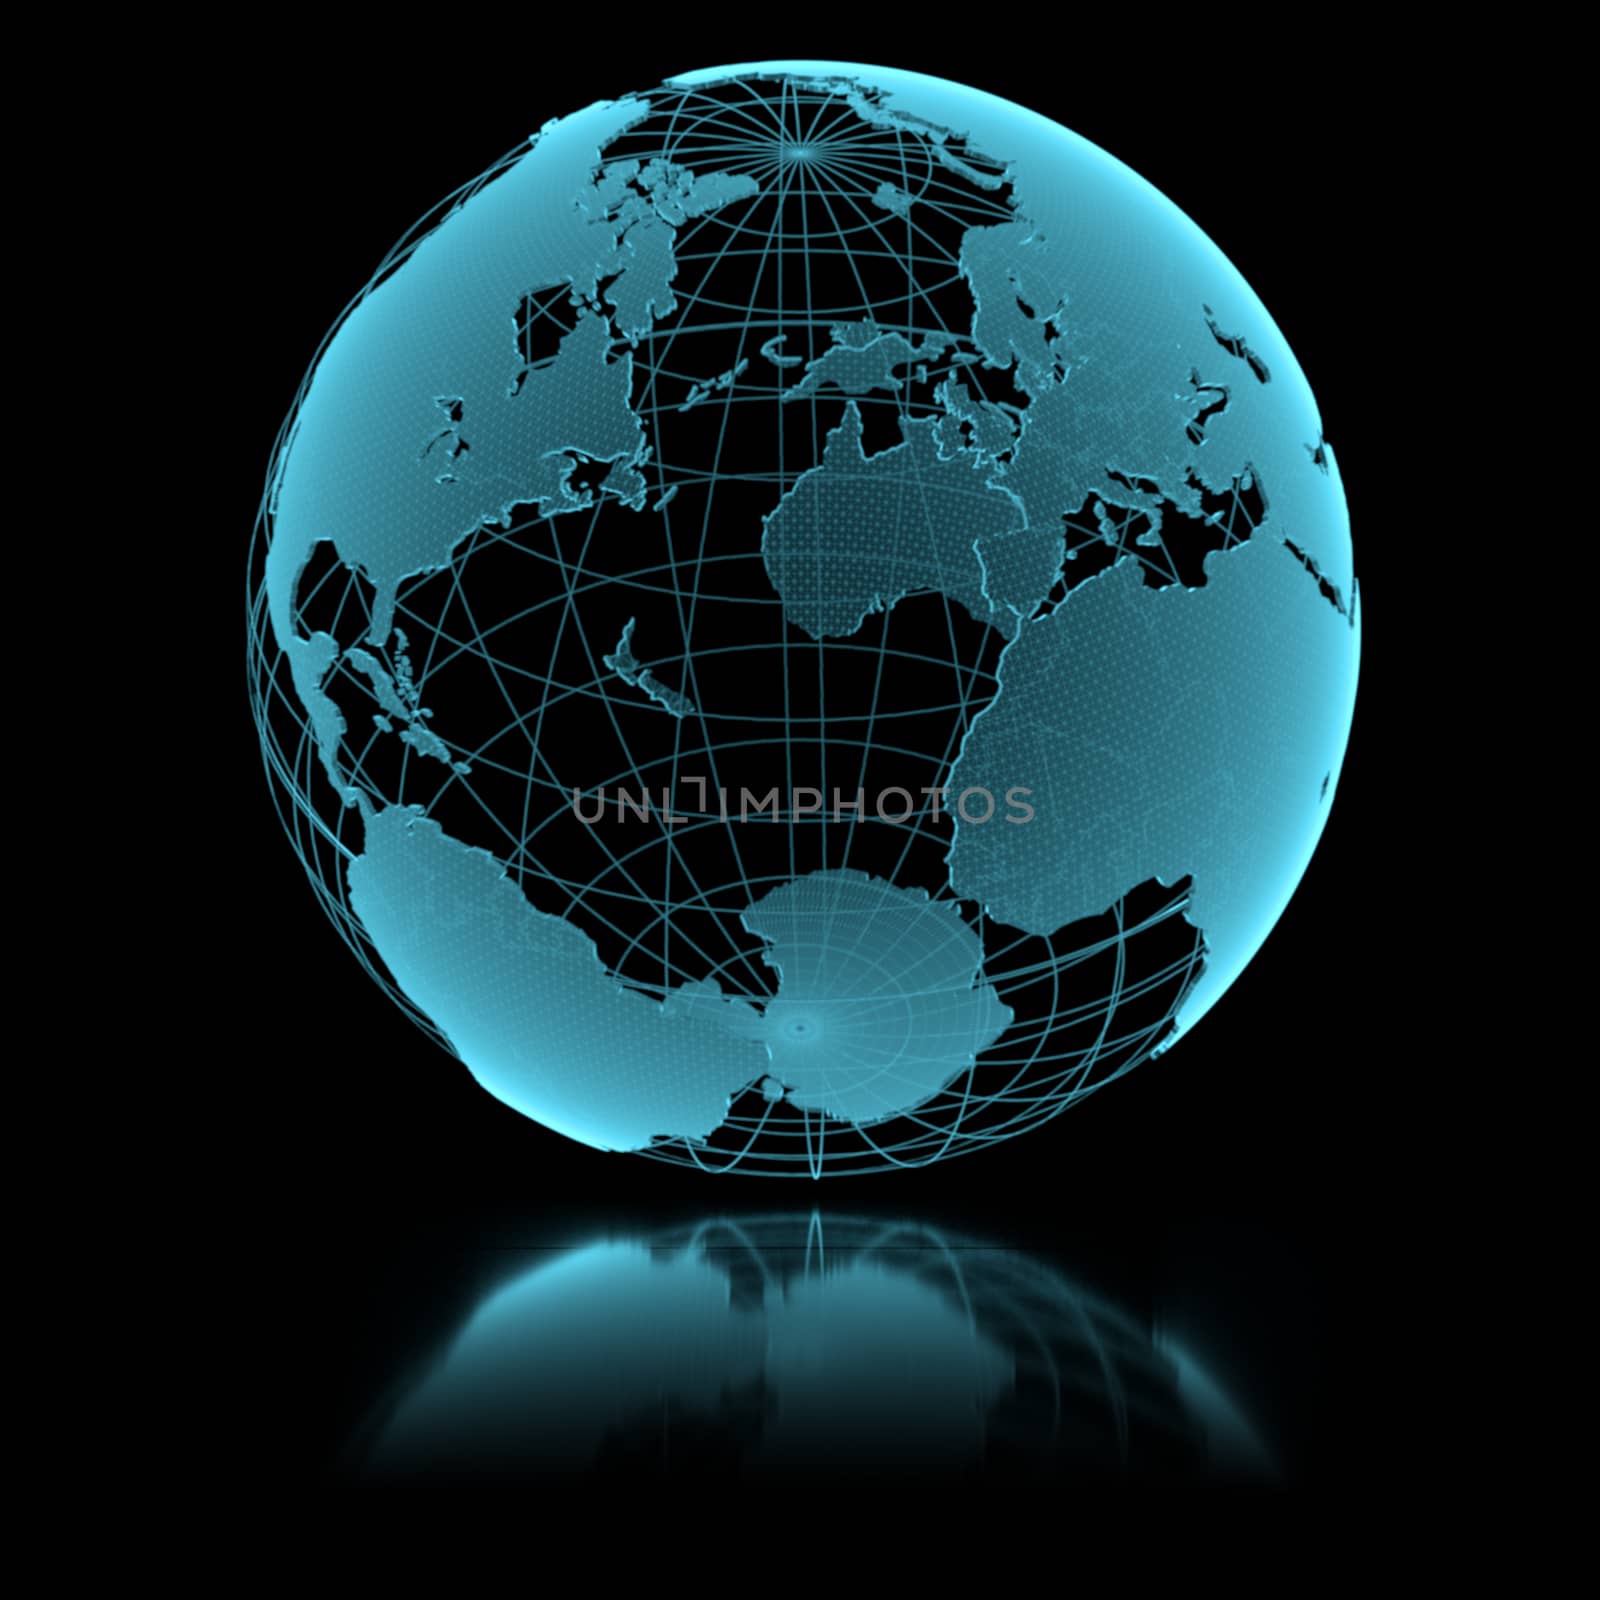 Blue shining transparent earth globe on black background. 3d illustration.